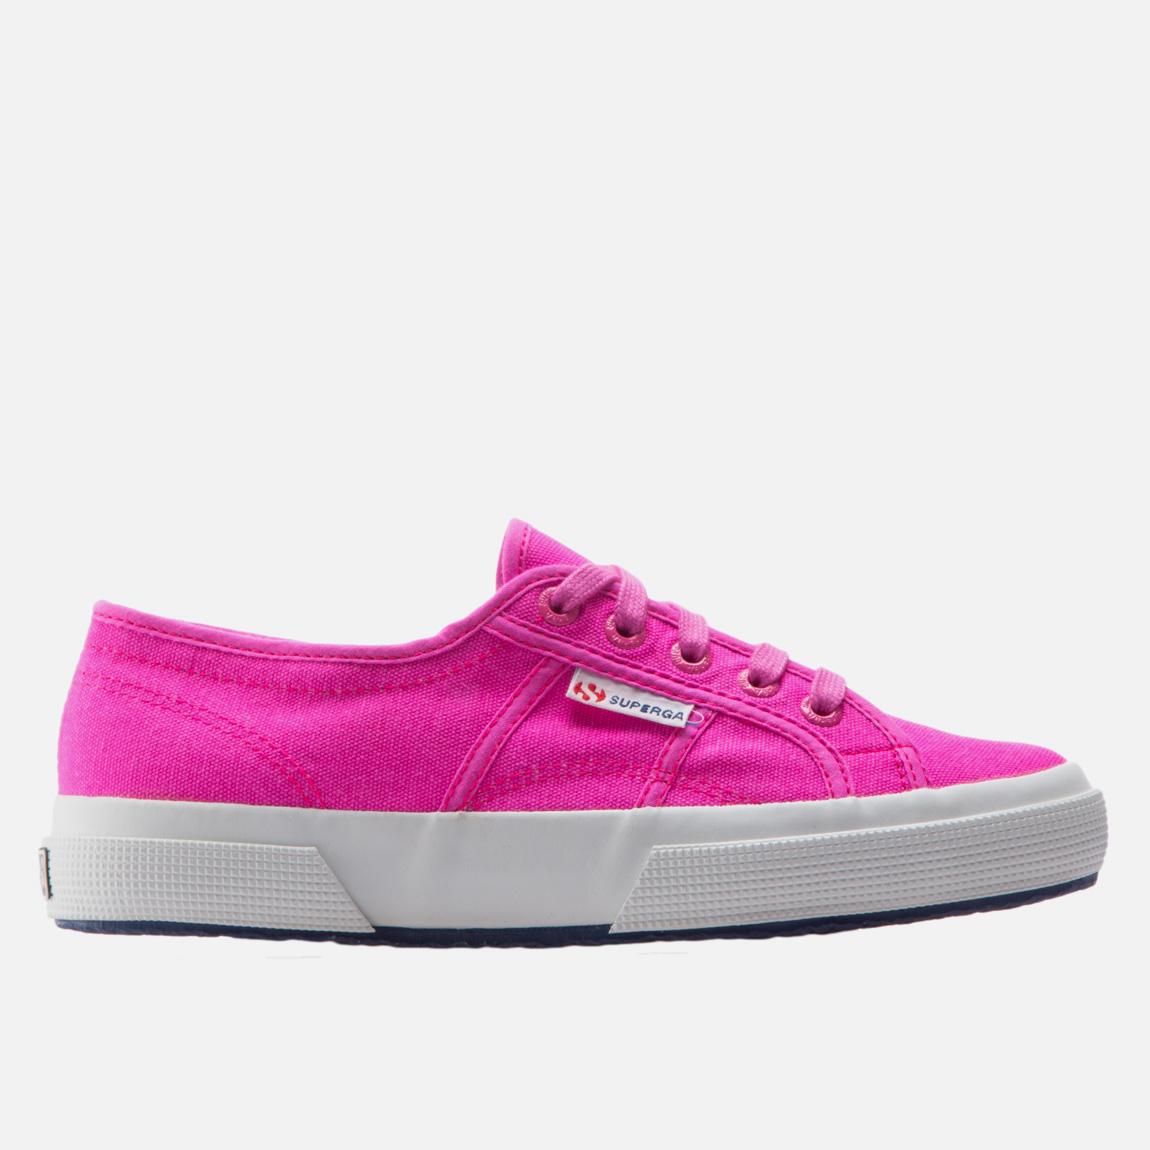 2750 Cotu – Fluo Pink SUPERGA Sneakers | Superbalist.com